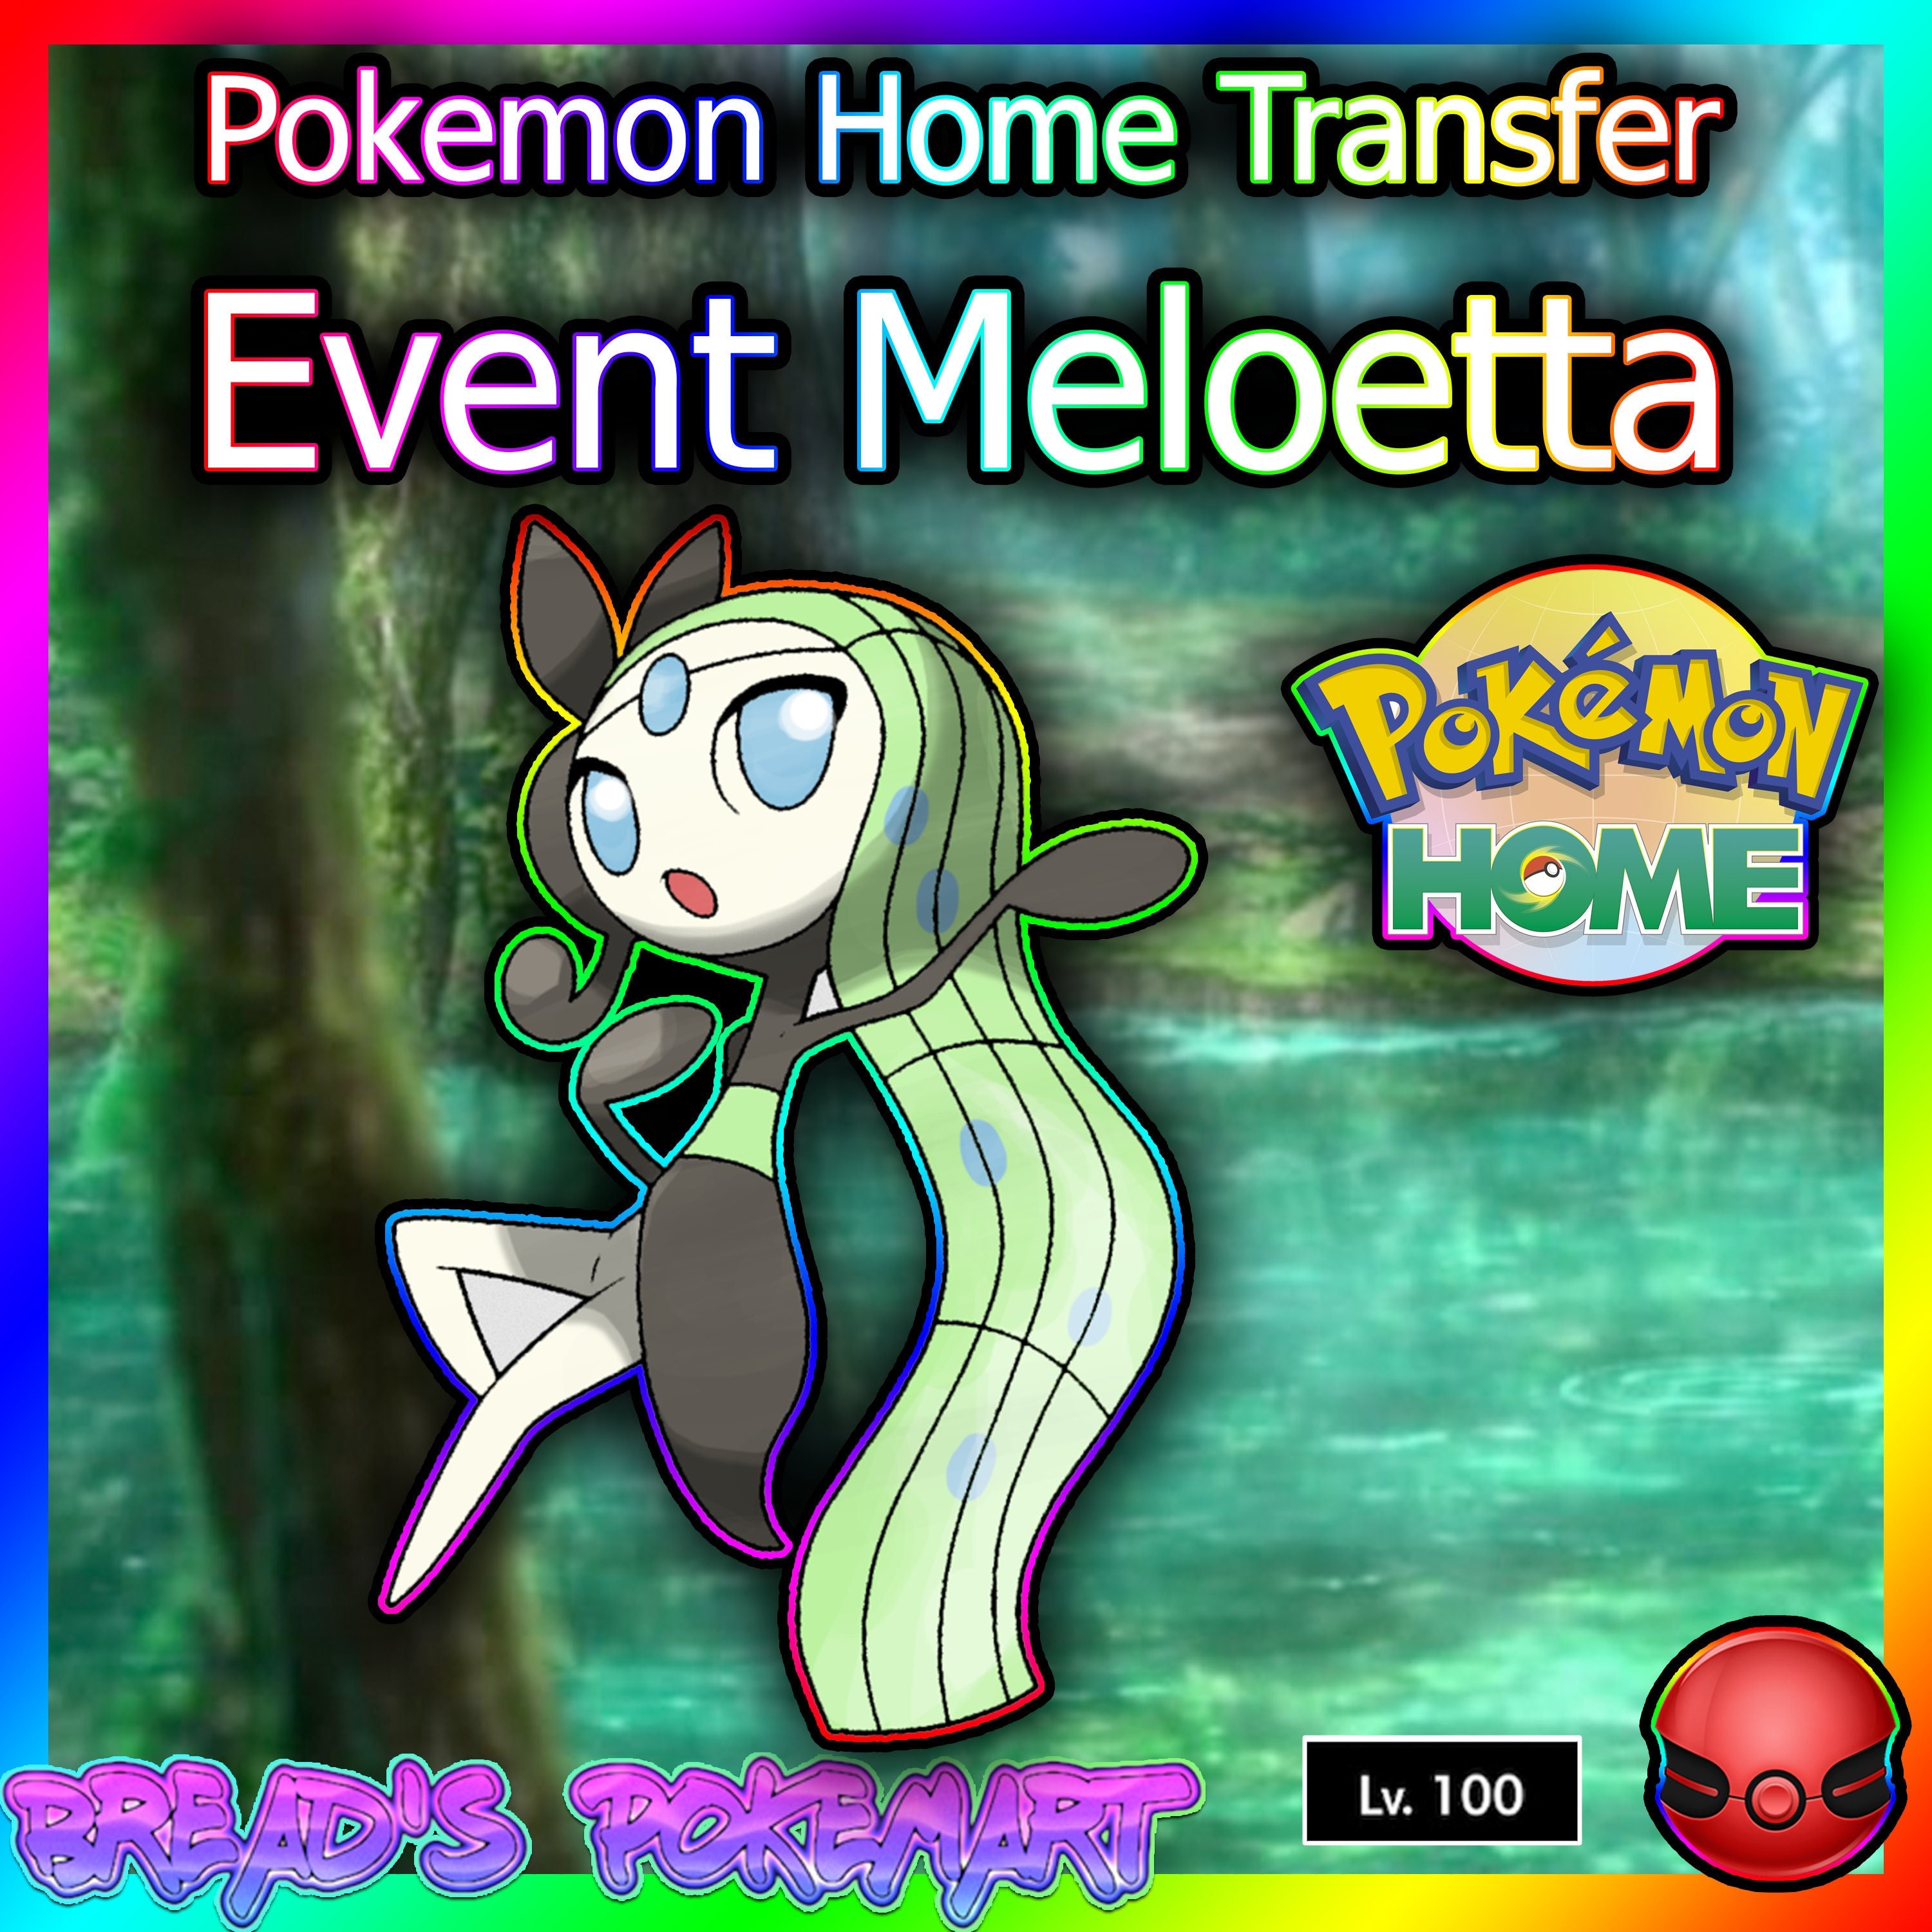 You've til Christmas to grab the Mystical Pokémon, Meloetta